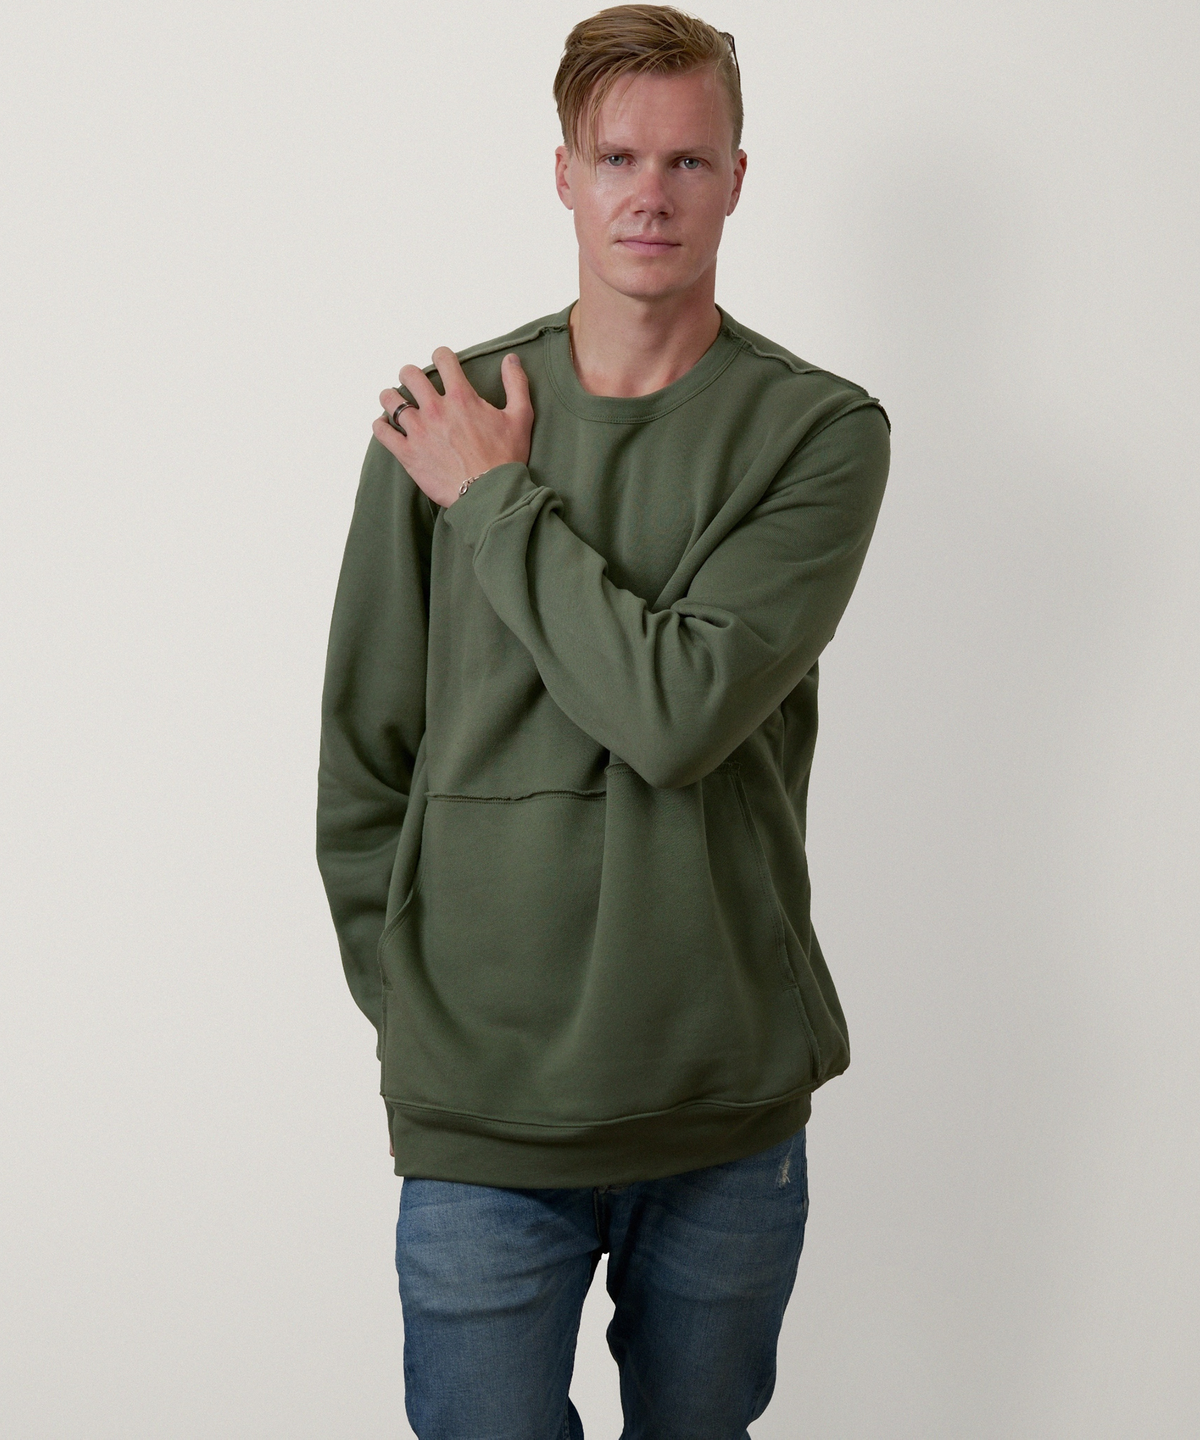 Layered Kangaroo Pocket Sweatshirt for Men (Military Green)